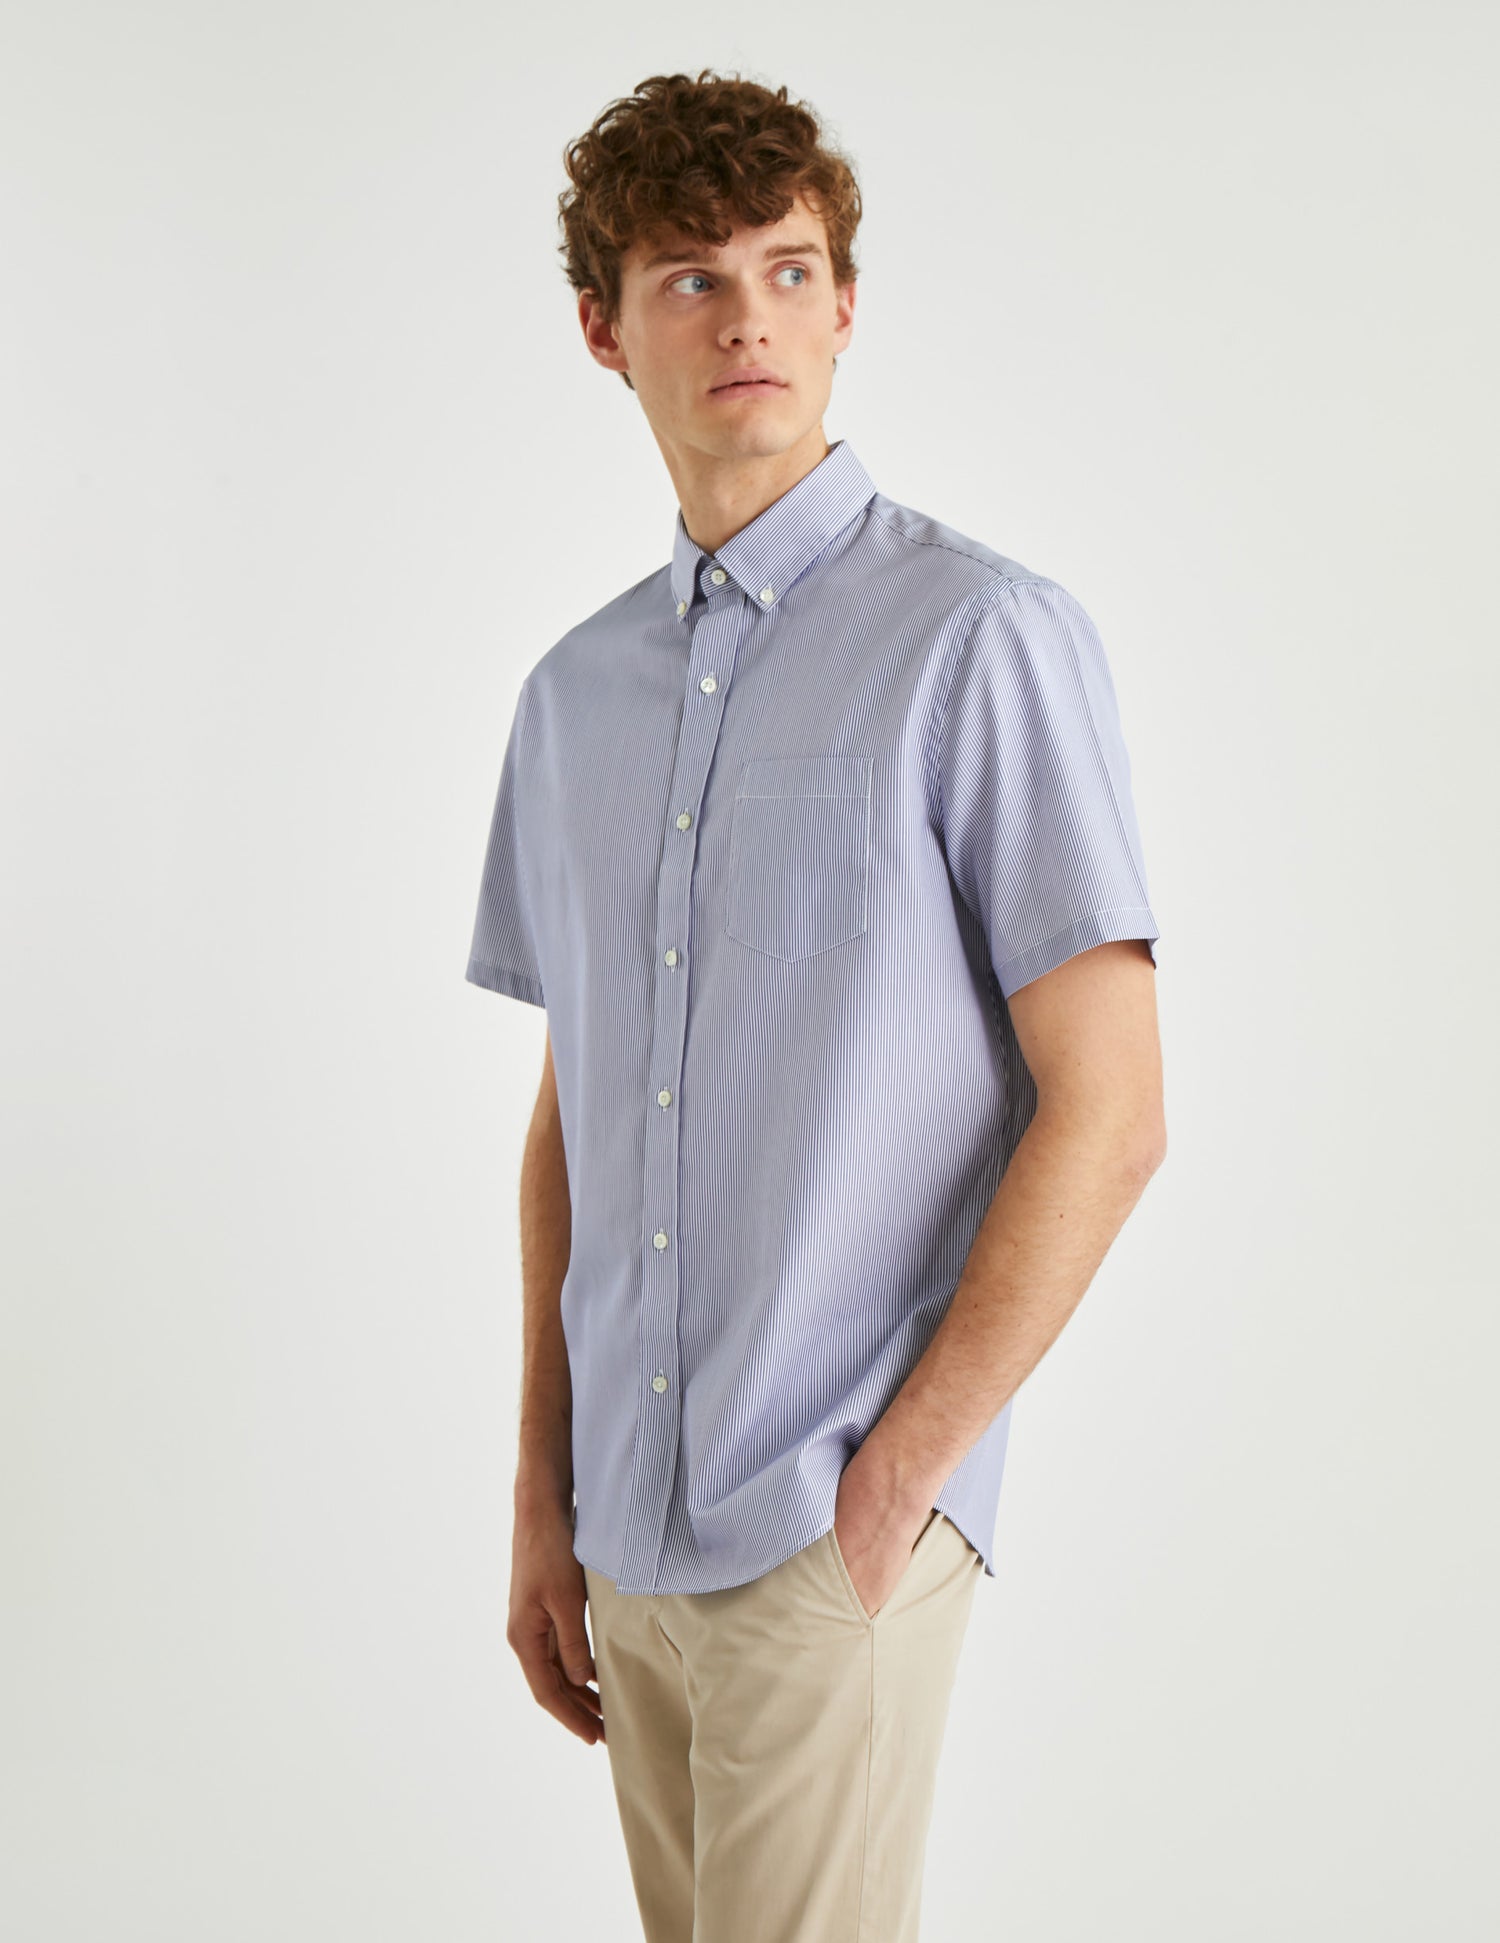 Blue Striped Classic Shirt - Poplin - American Collar#3